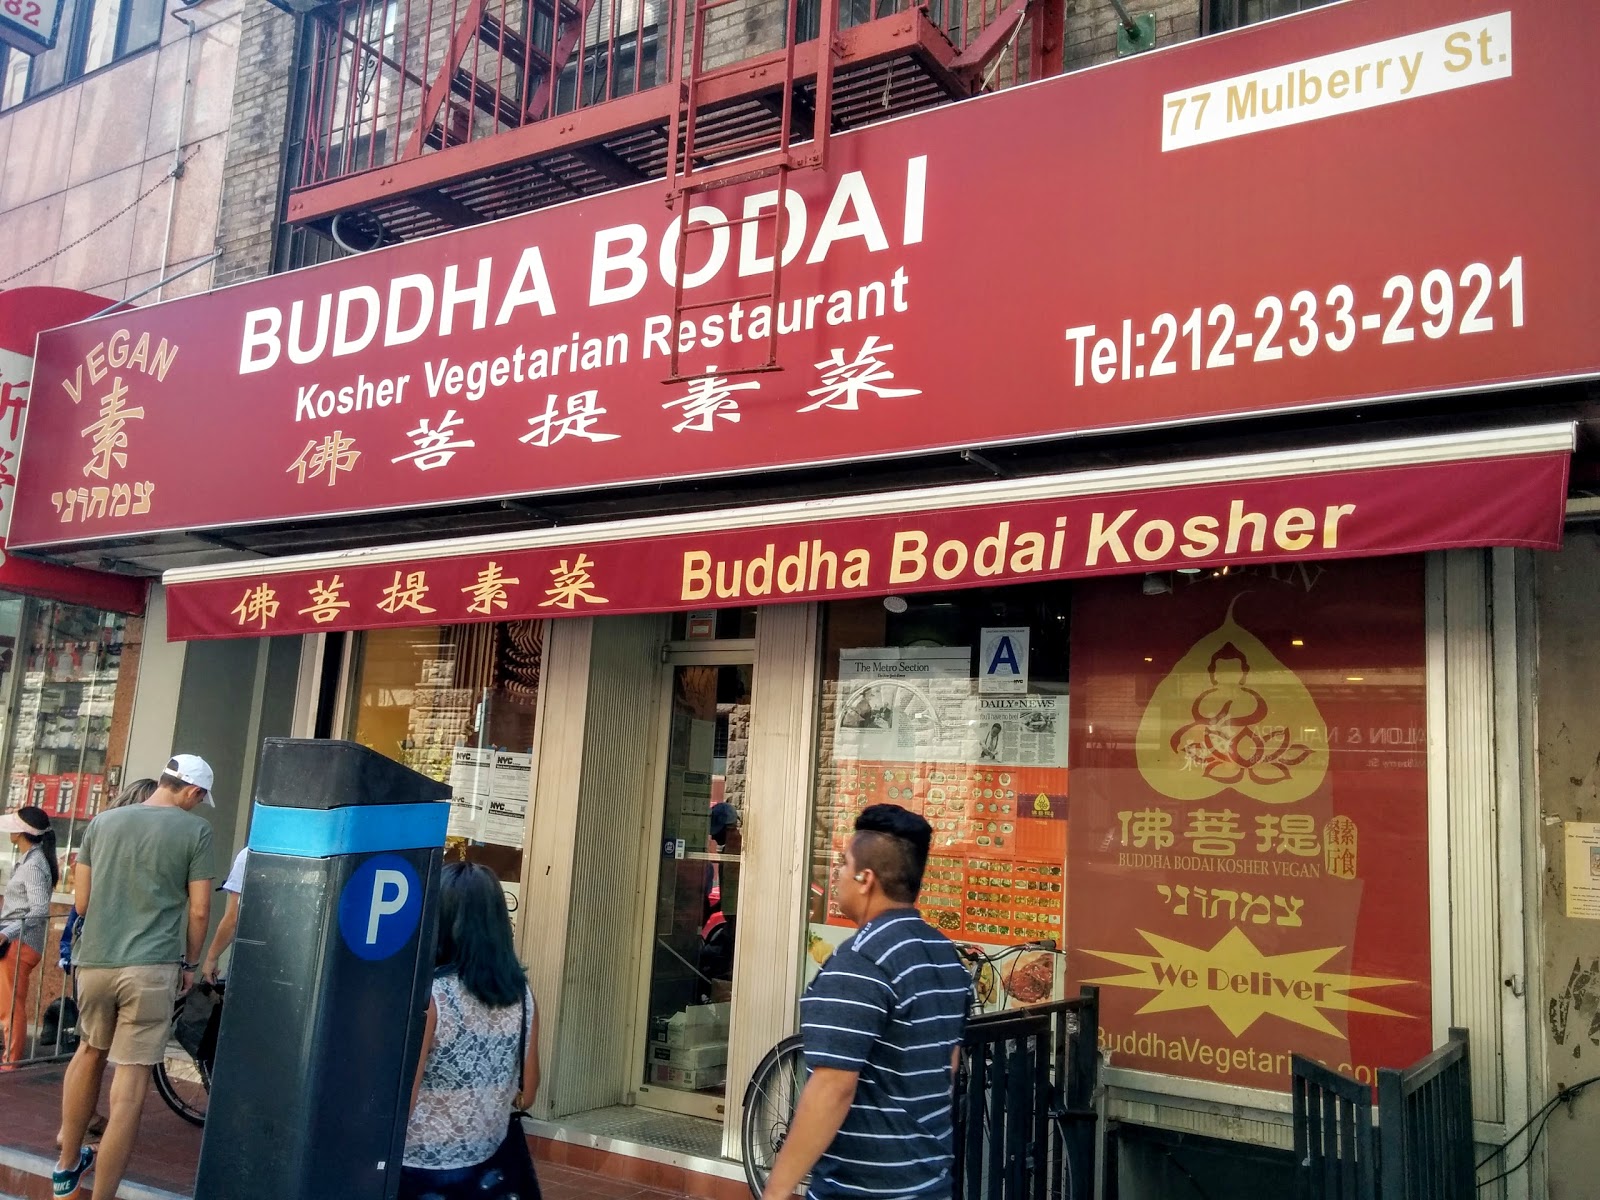 Photo of Buddha Bodai Kosher Vegan in New York City, New York, United States - 3 Picture of Restaurant, Food, Point of interest, Establishment